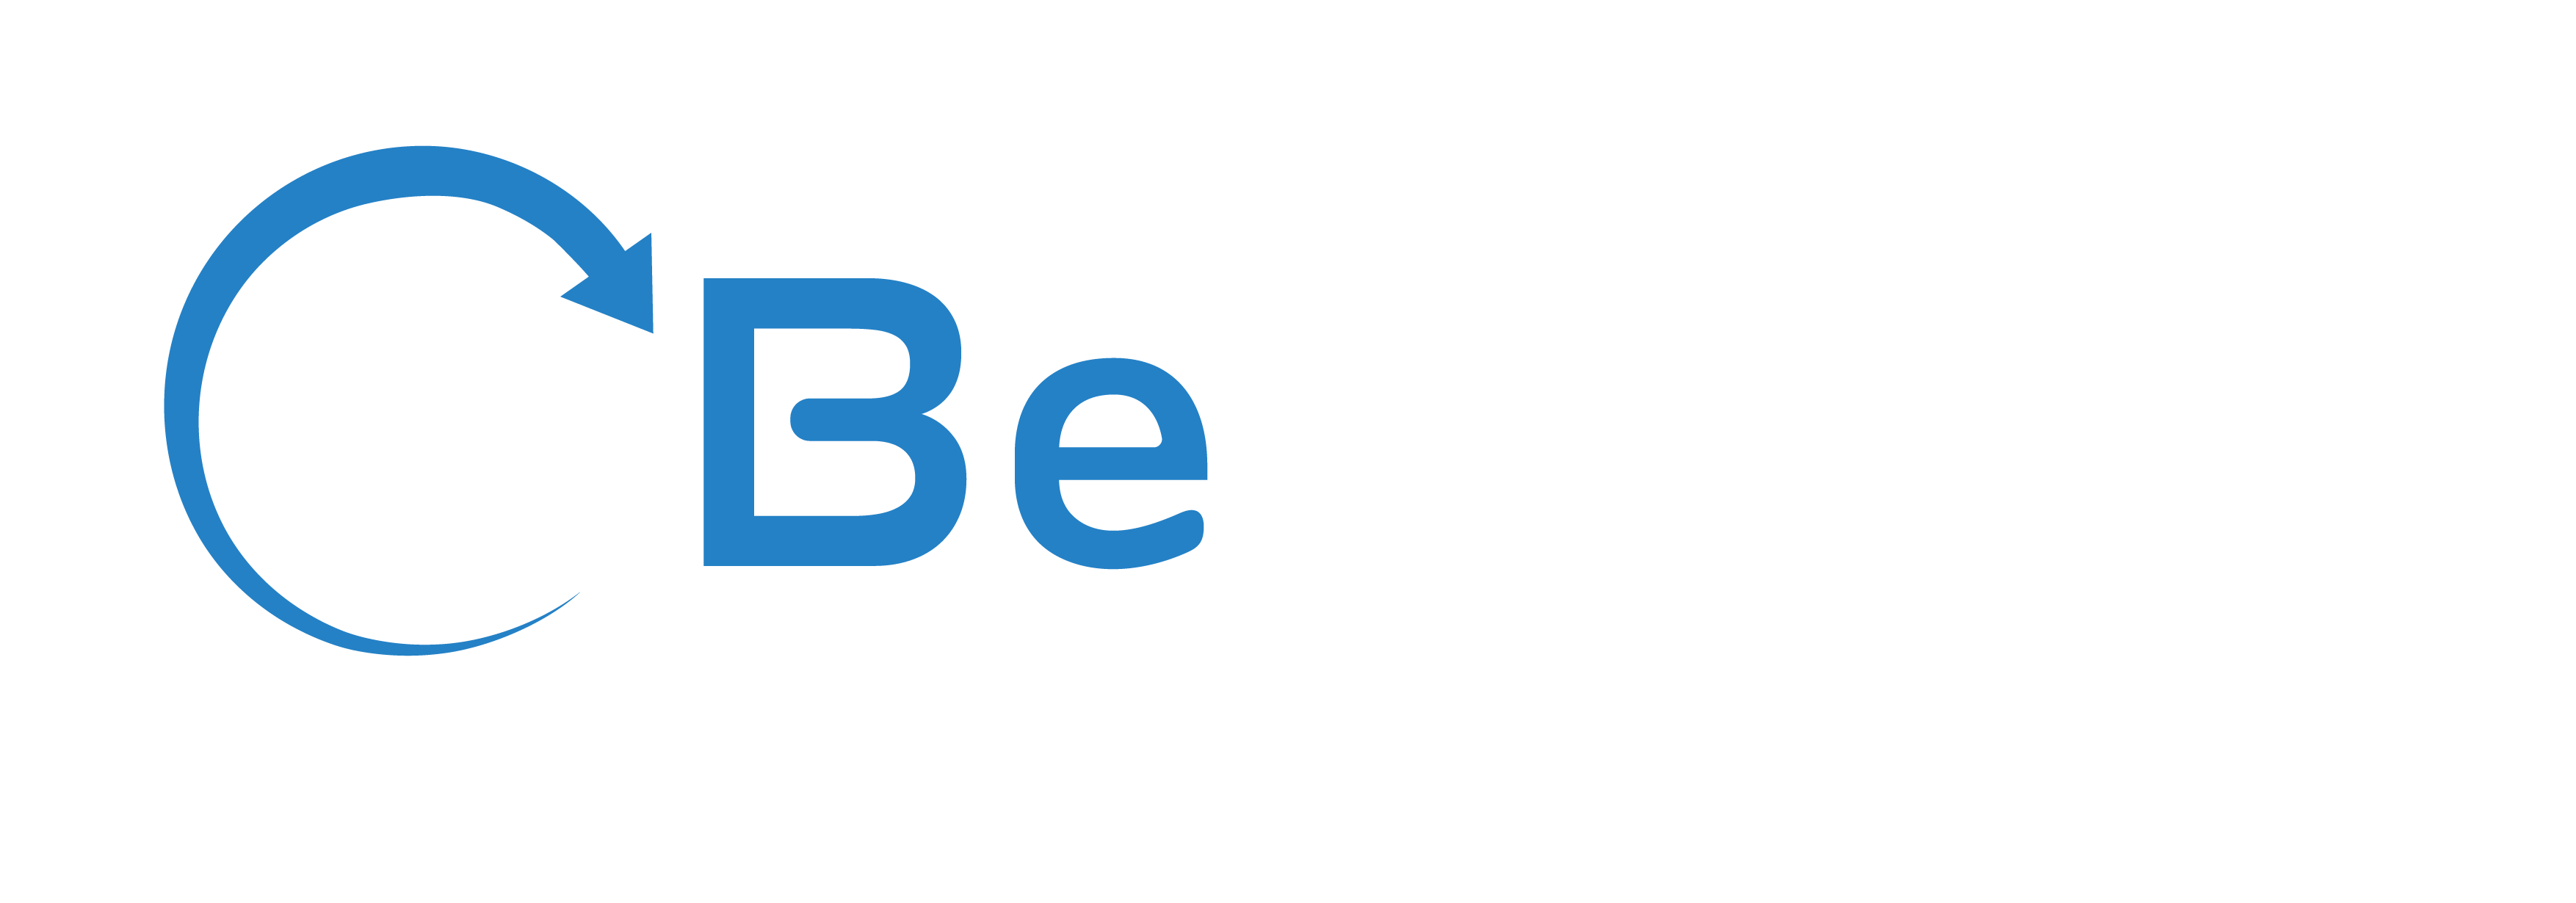 Sibe Work oy logo